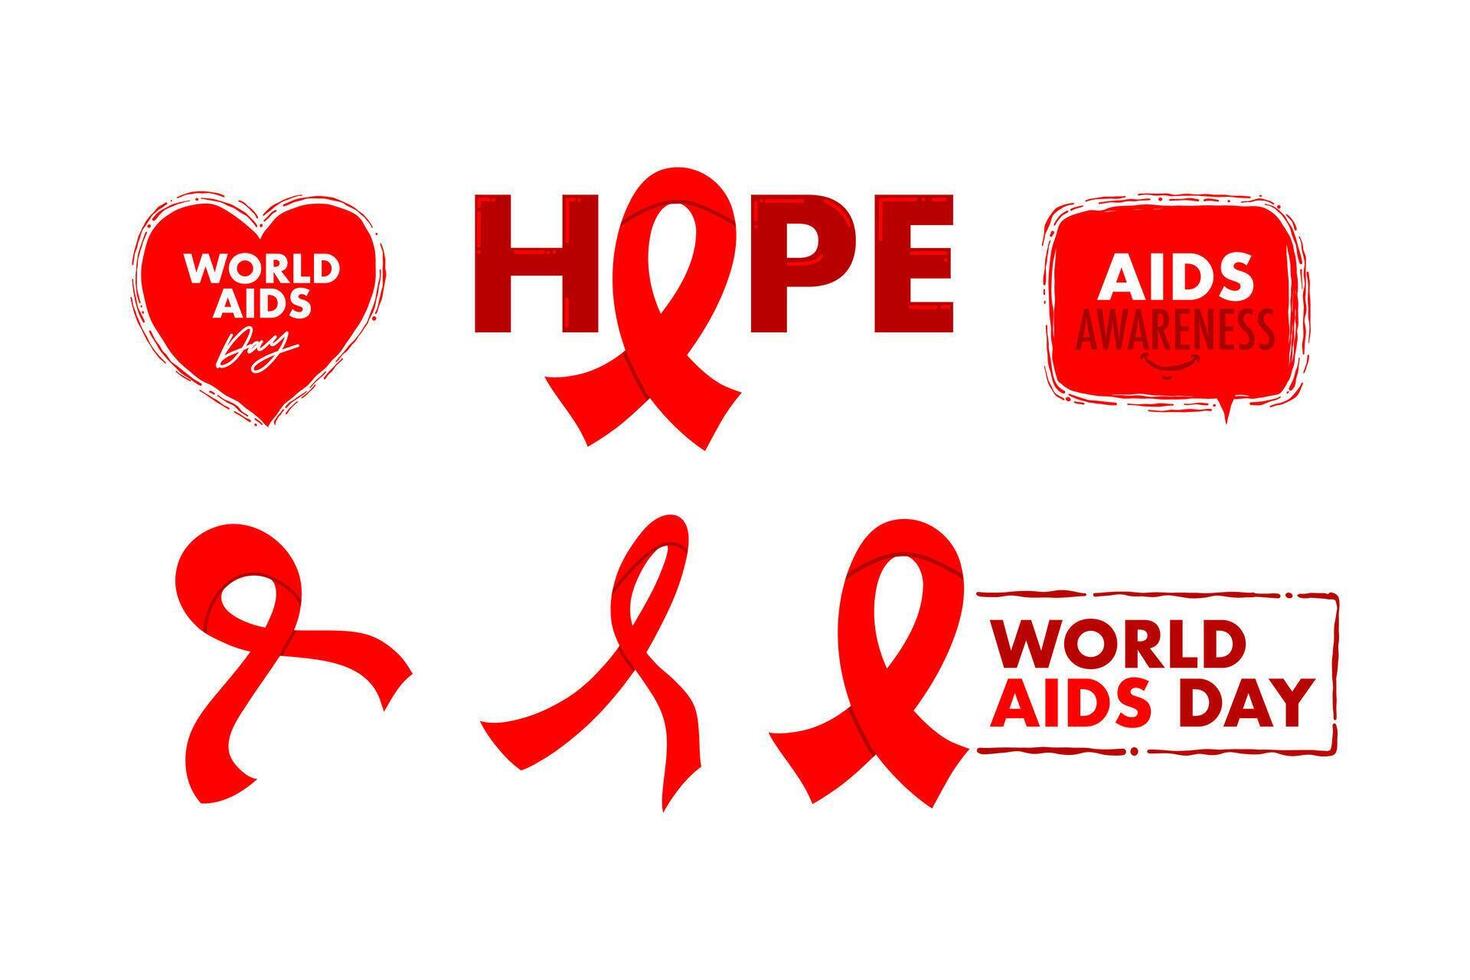 Hand drawn world AIDS day vector set illustration. December 1st AIDS awareness celebration.